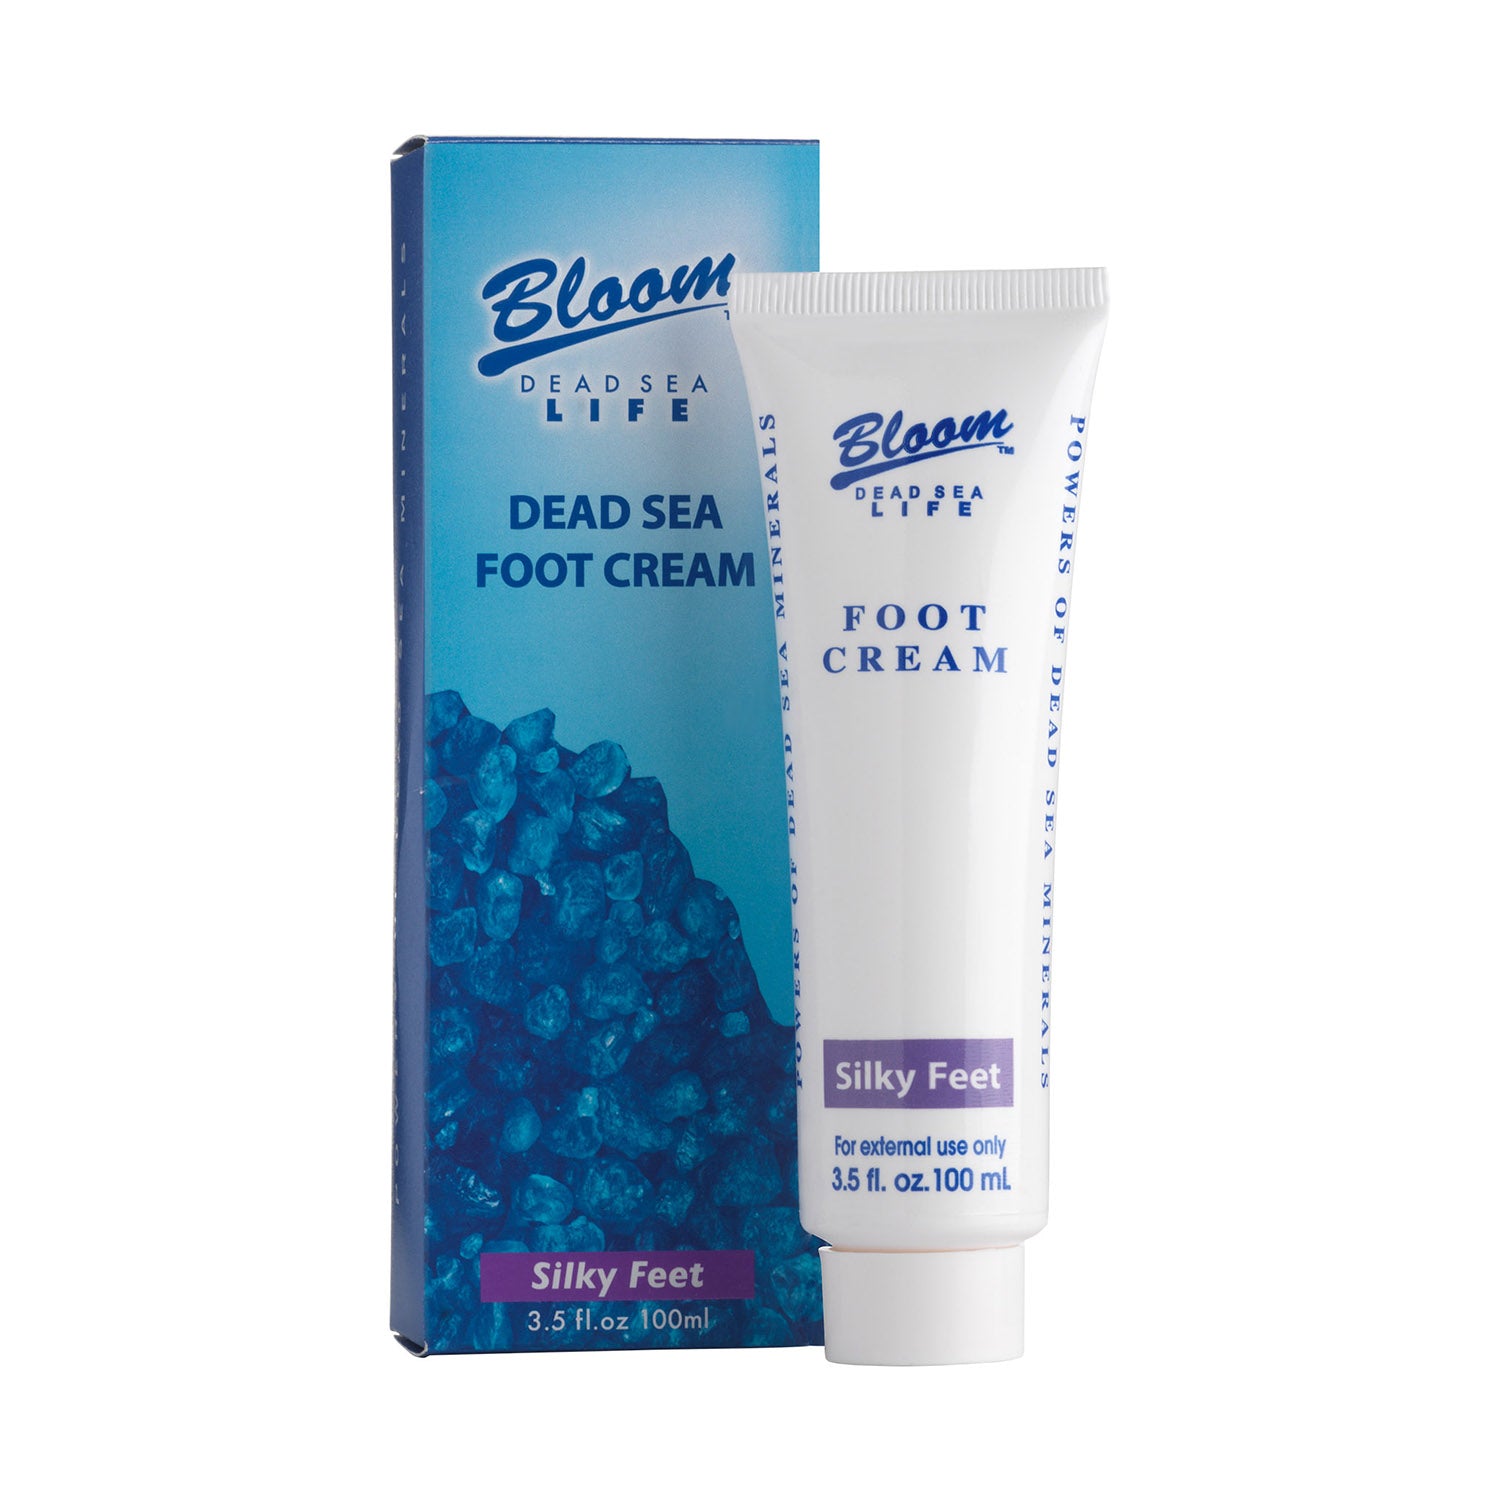 Dead Sea Products Foot Cream Bloom